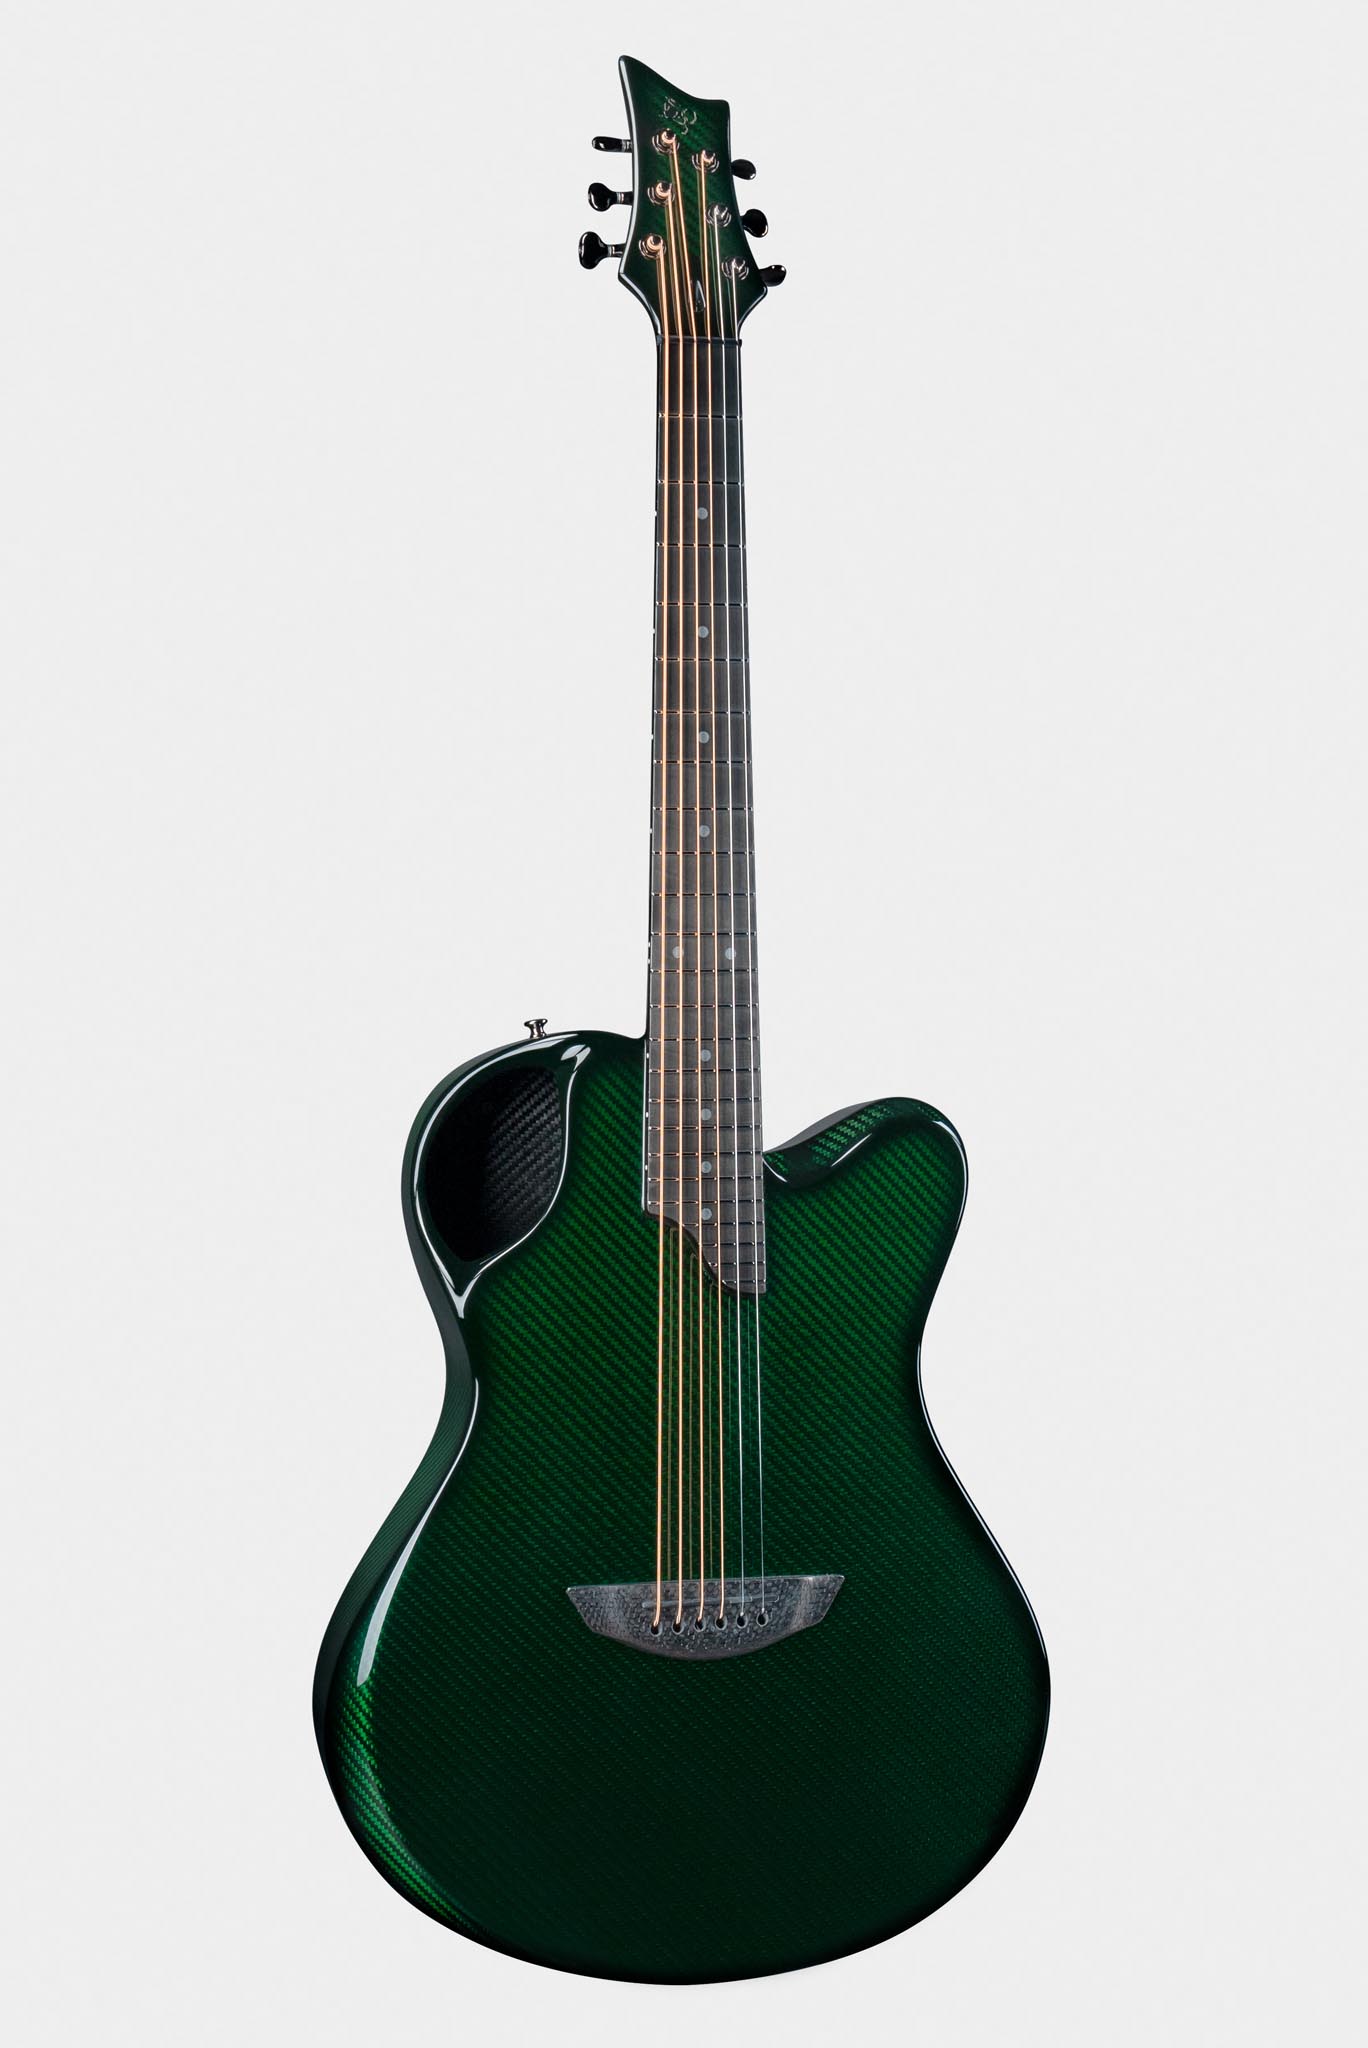 Emerald X20 Carbon Fiber Guitar in Green Finish